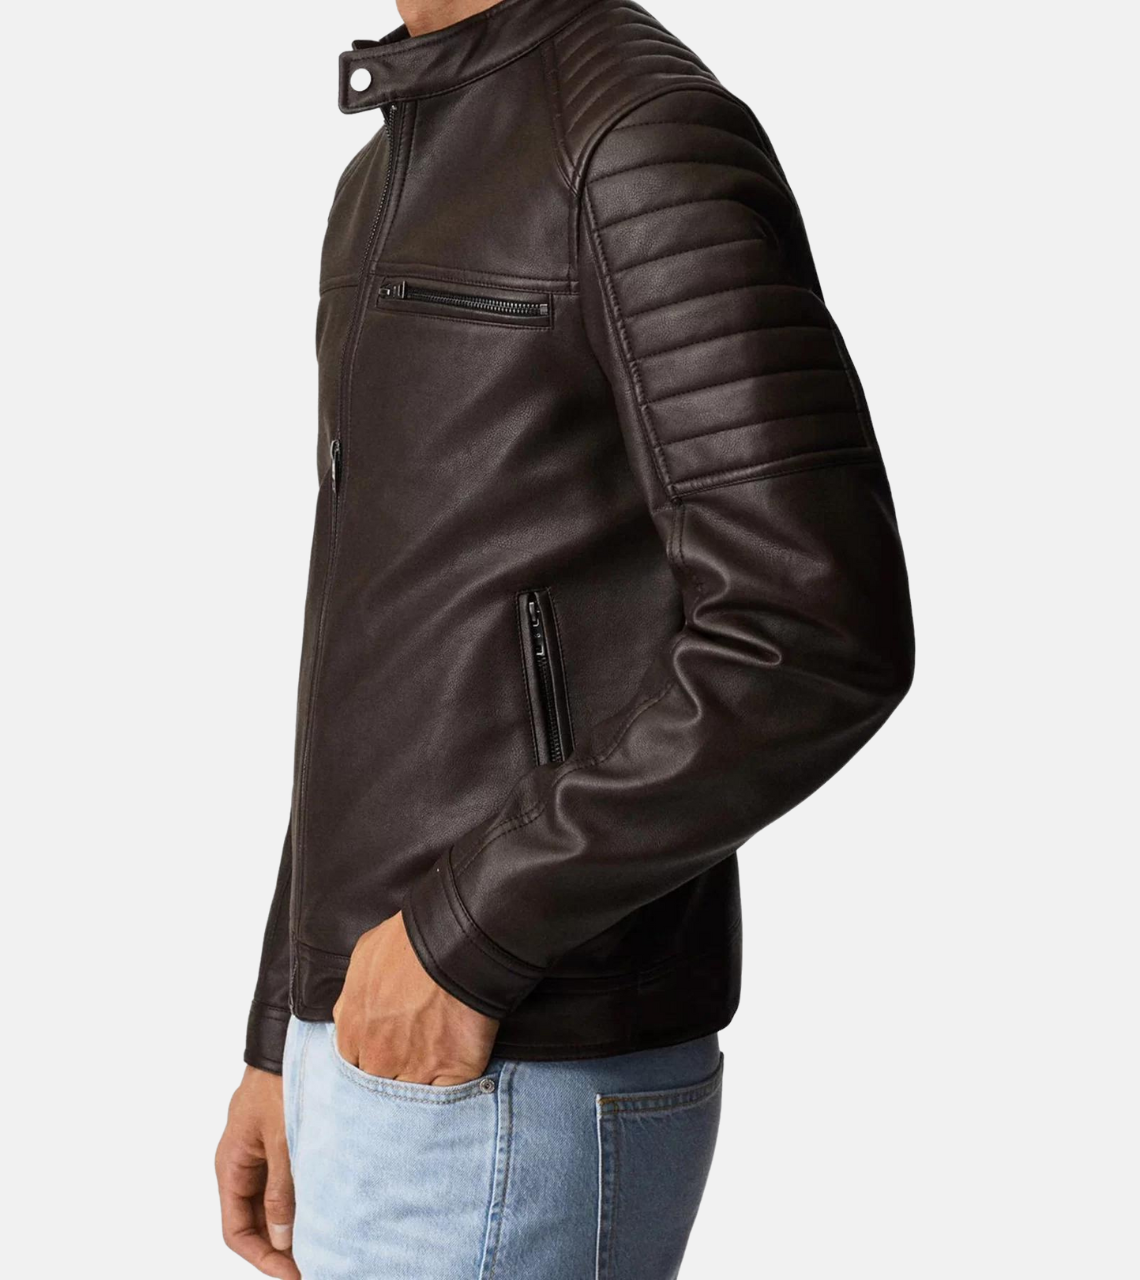 Men's Biker Leather Jacket